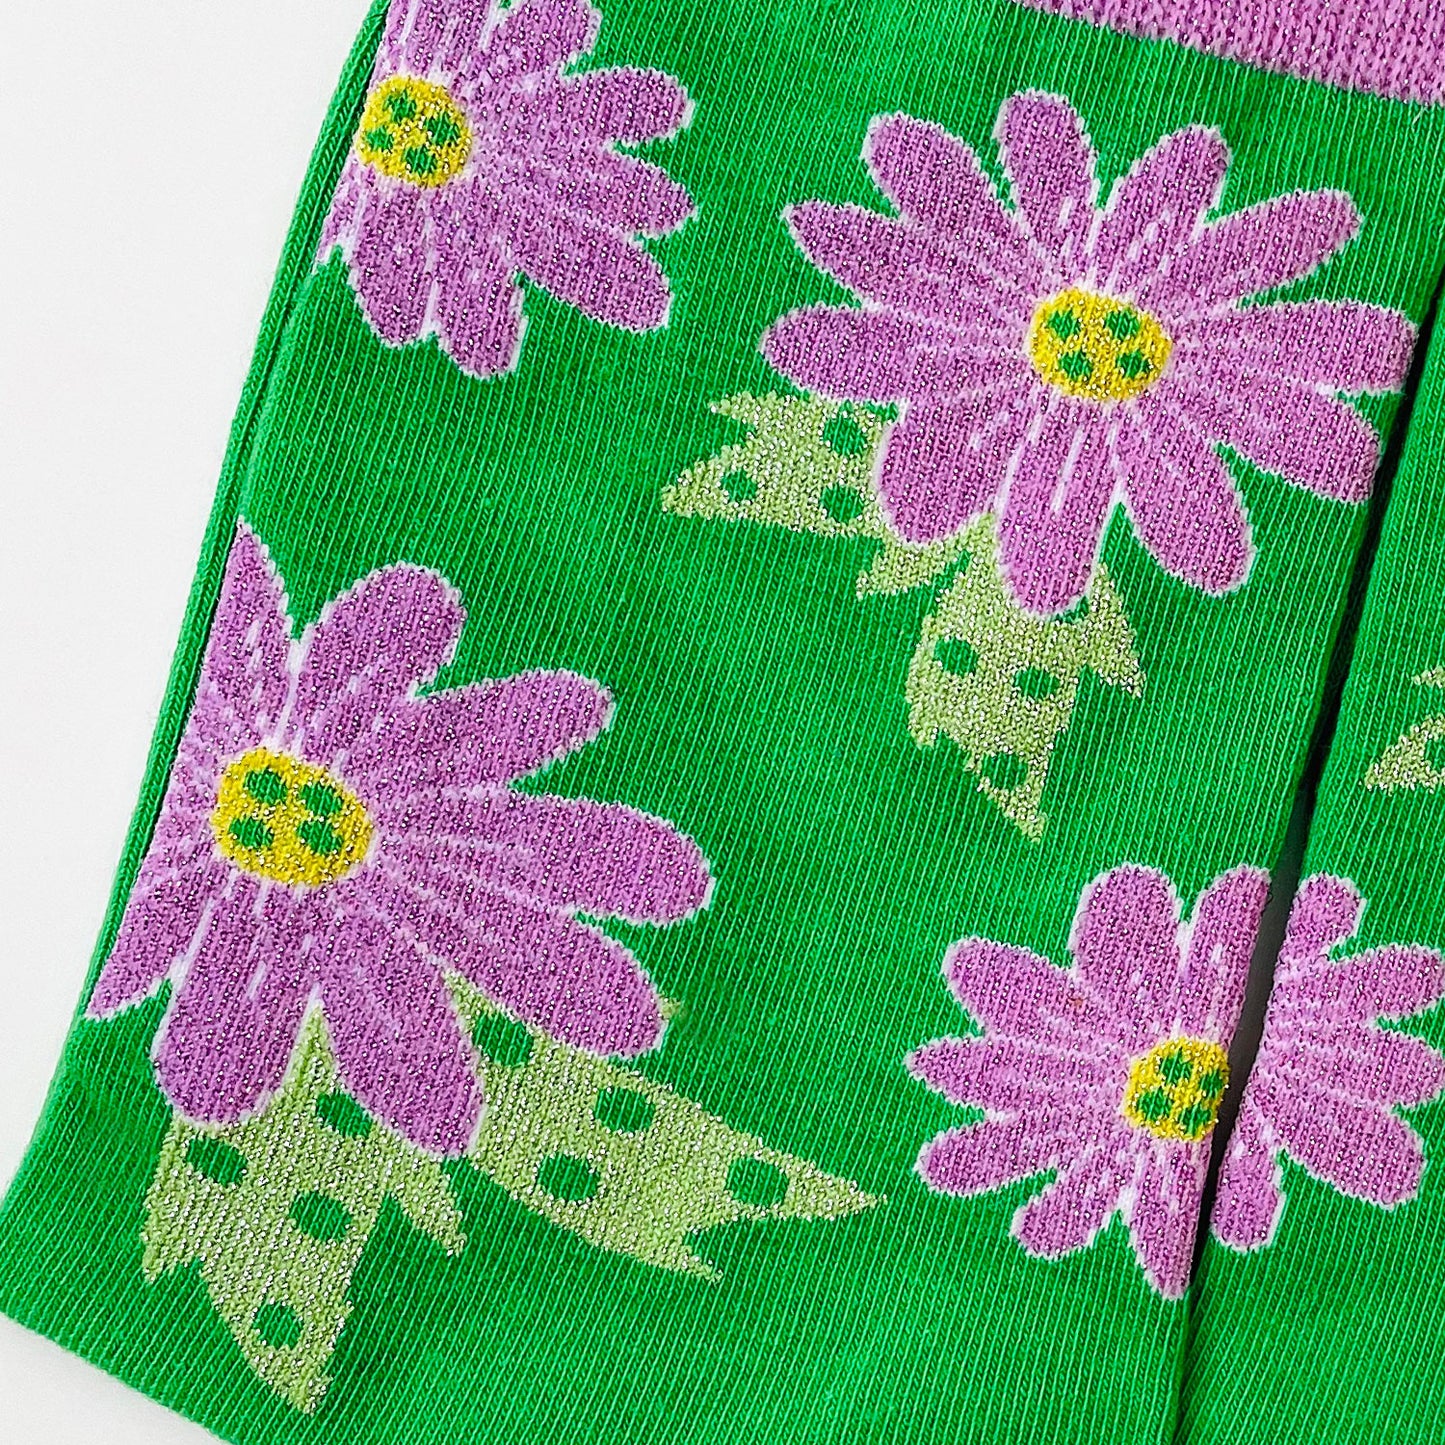 Green socks with purple flowers.